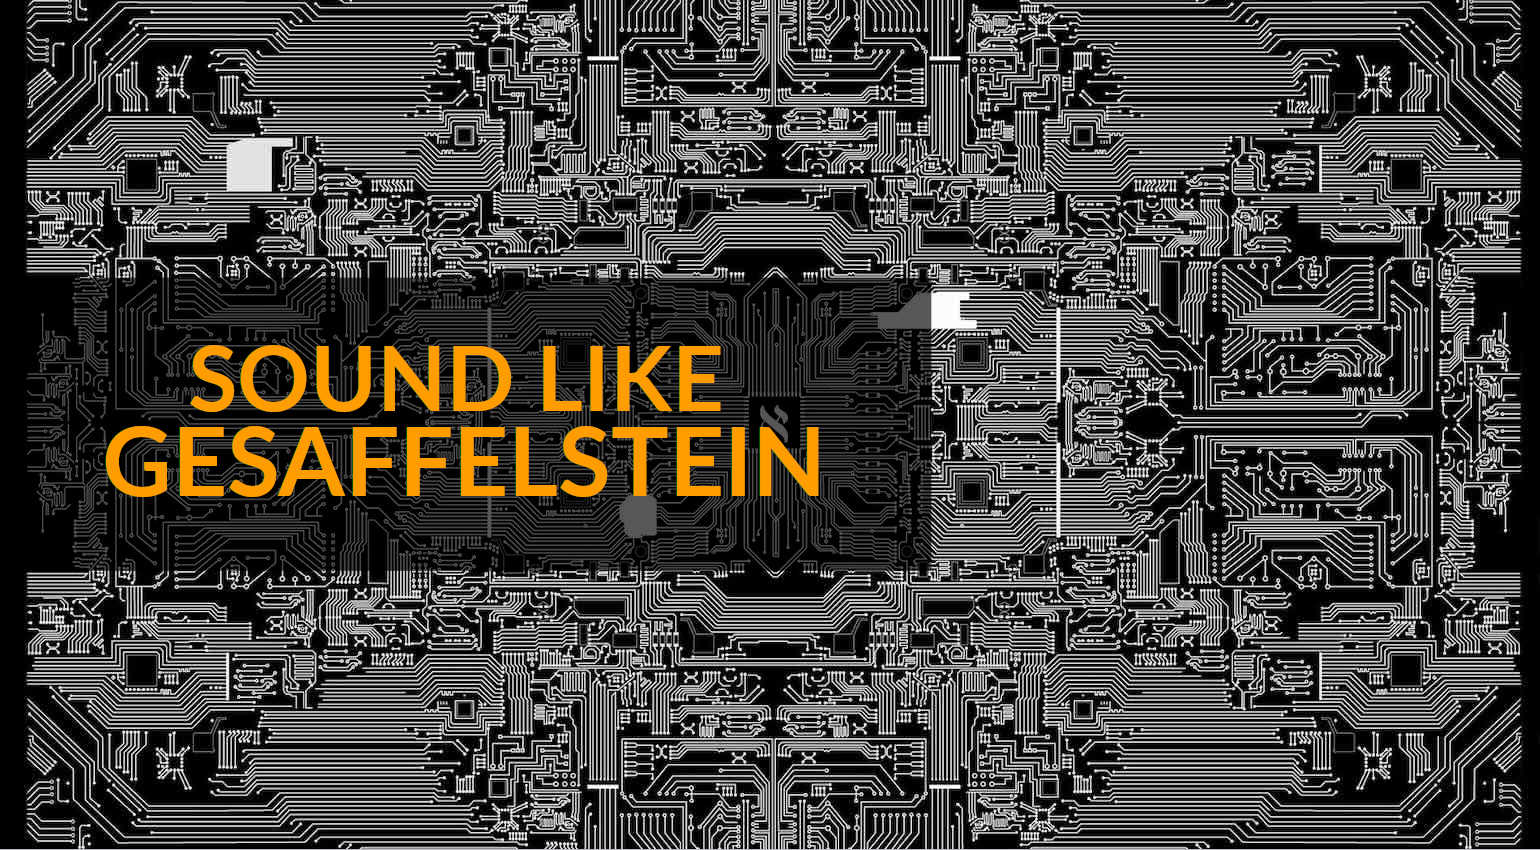 The Dark Prince Of Techno: How to Sound Like Gesaffelstein